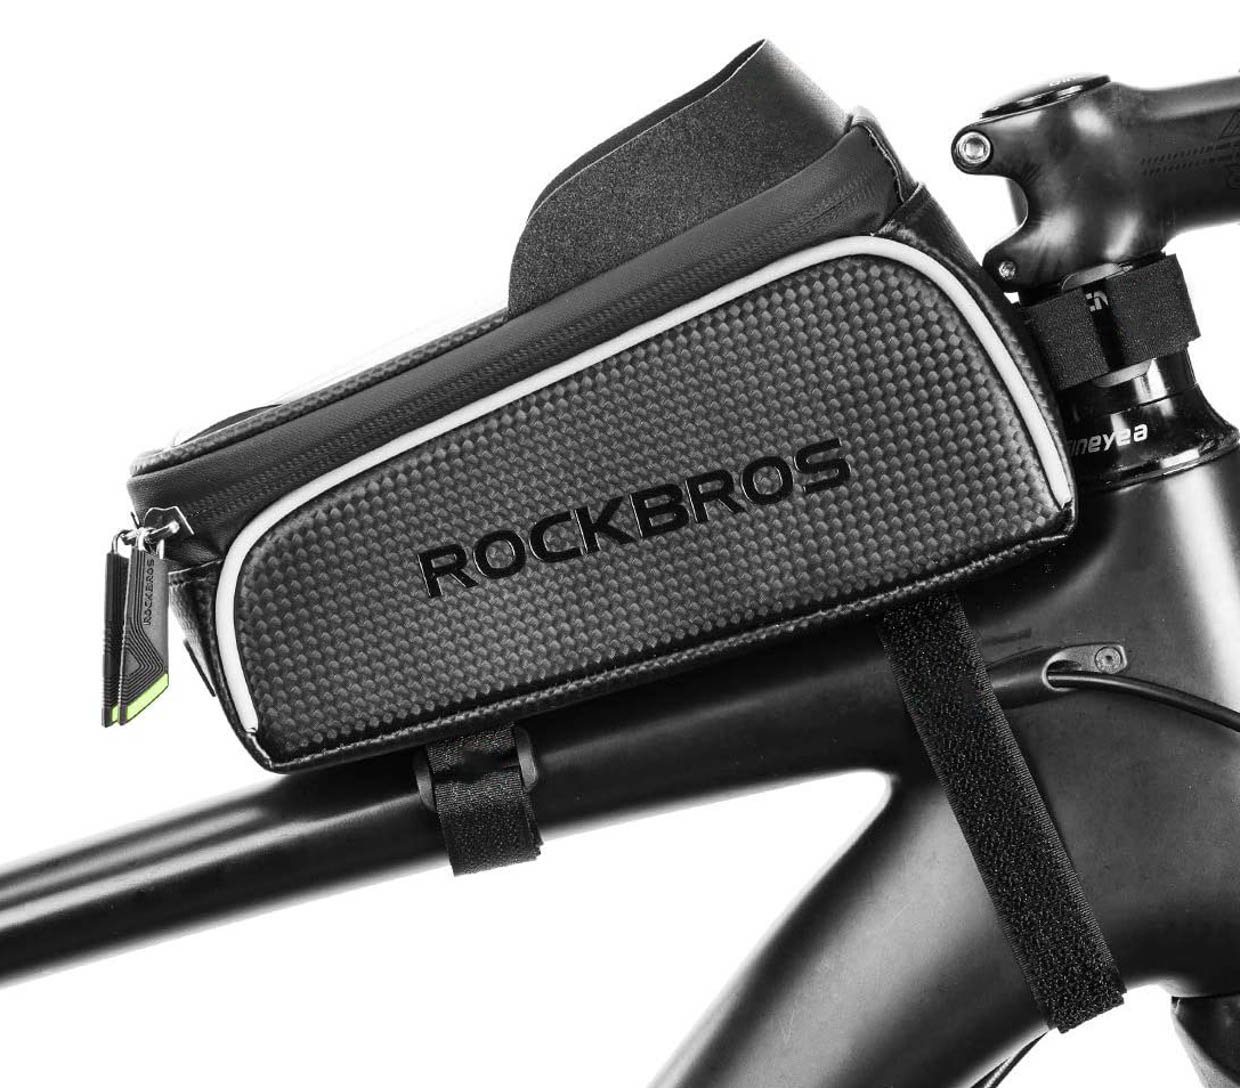 Rock Bros Bike Bag + Phone Mount